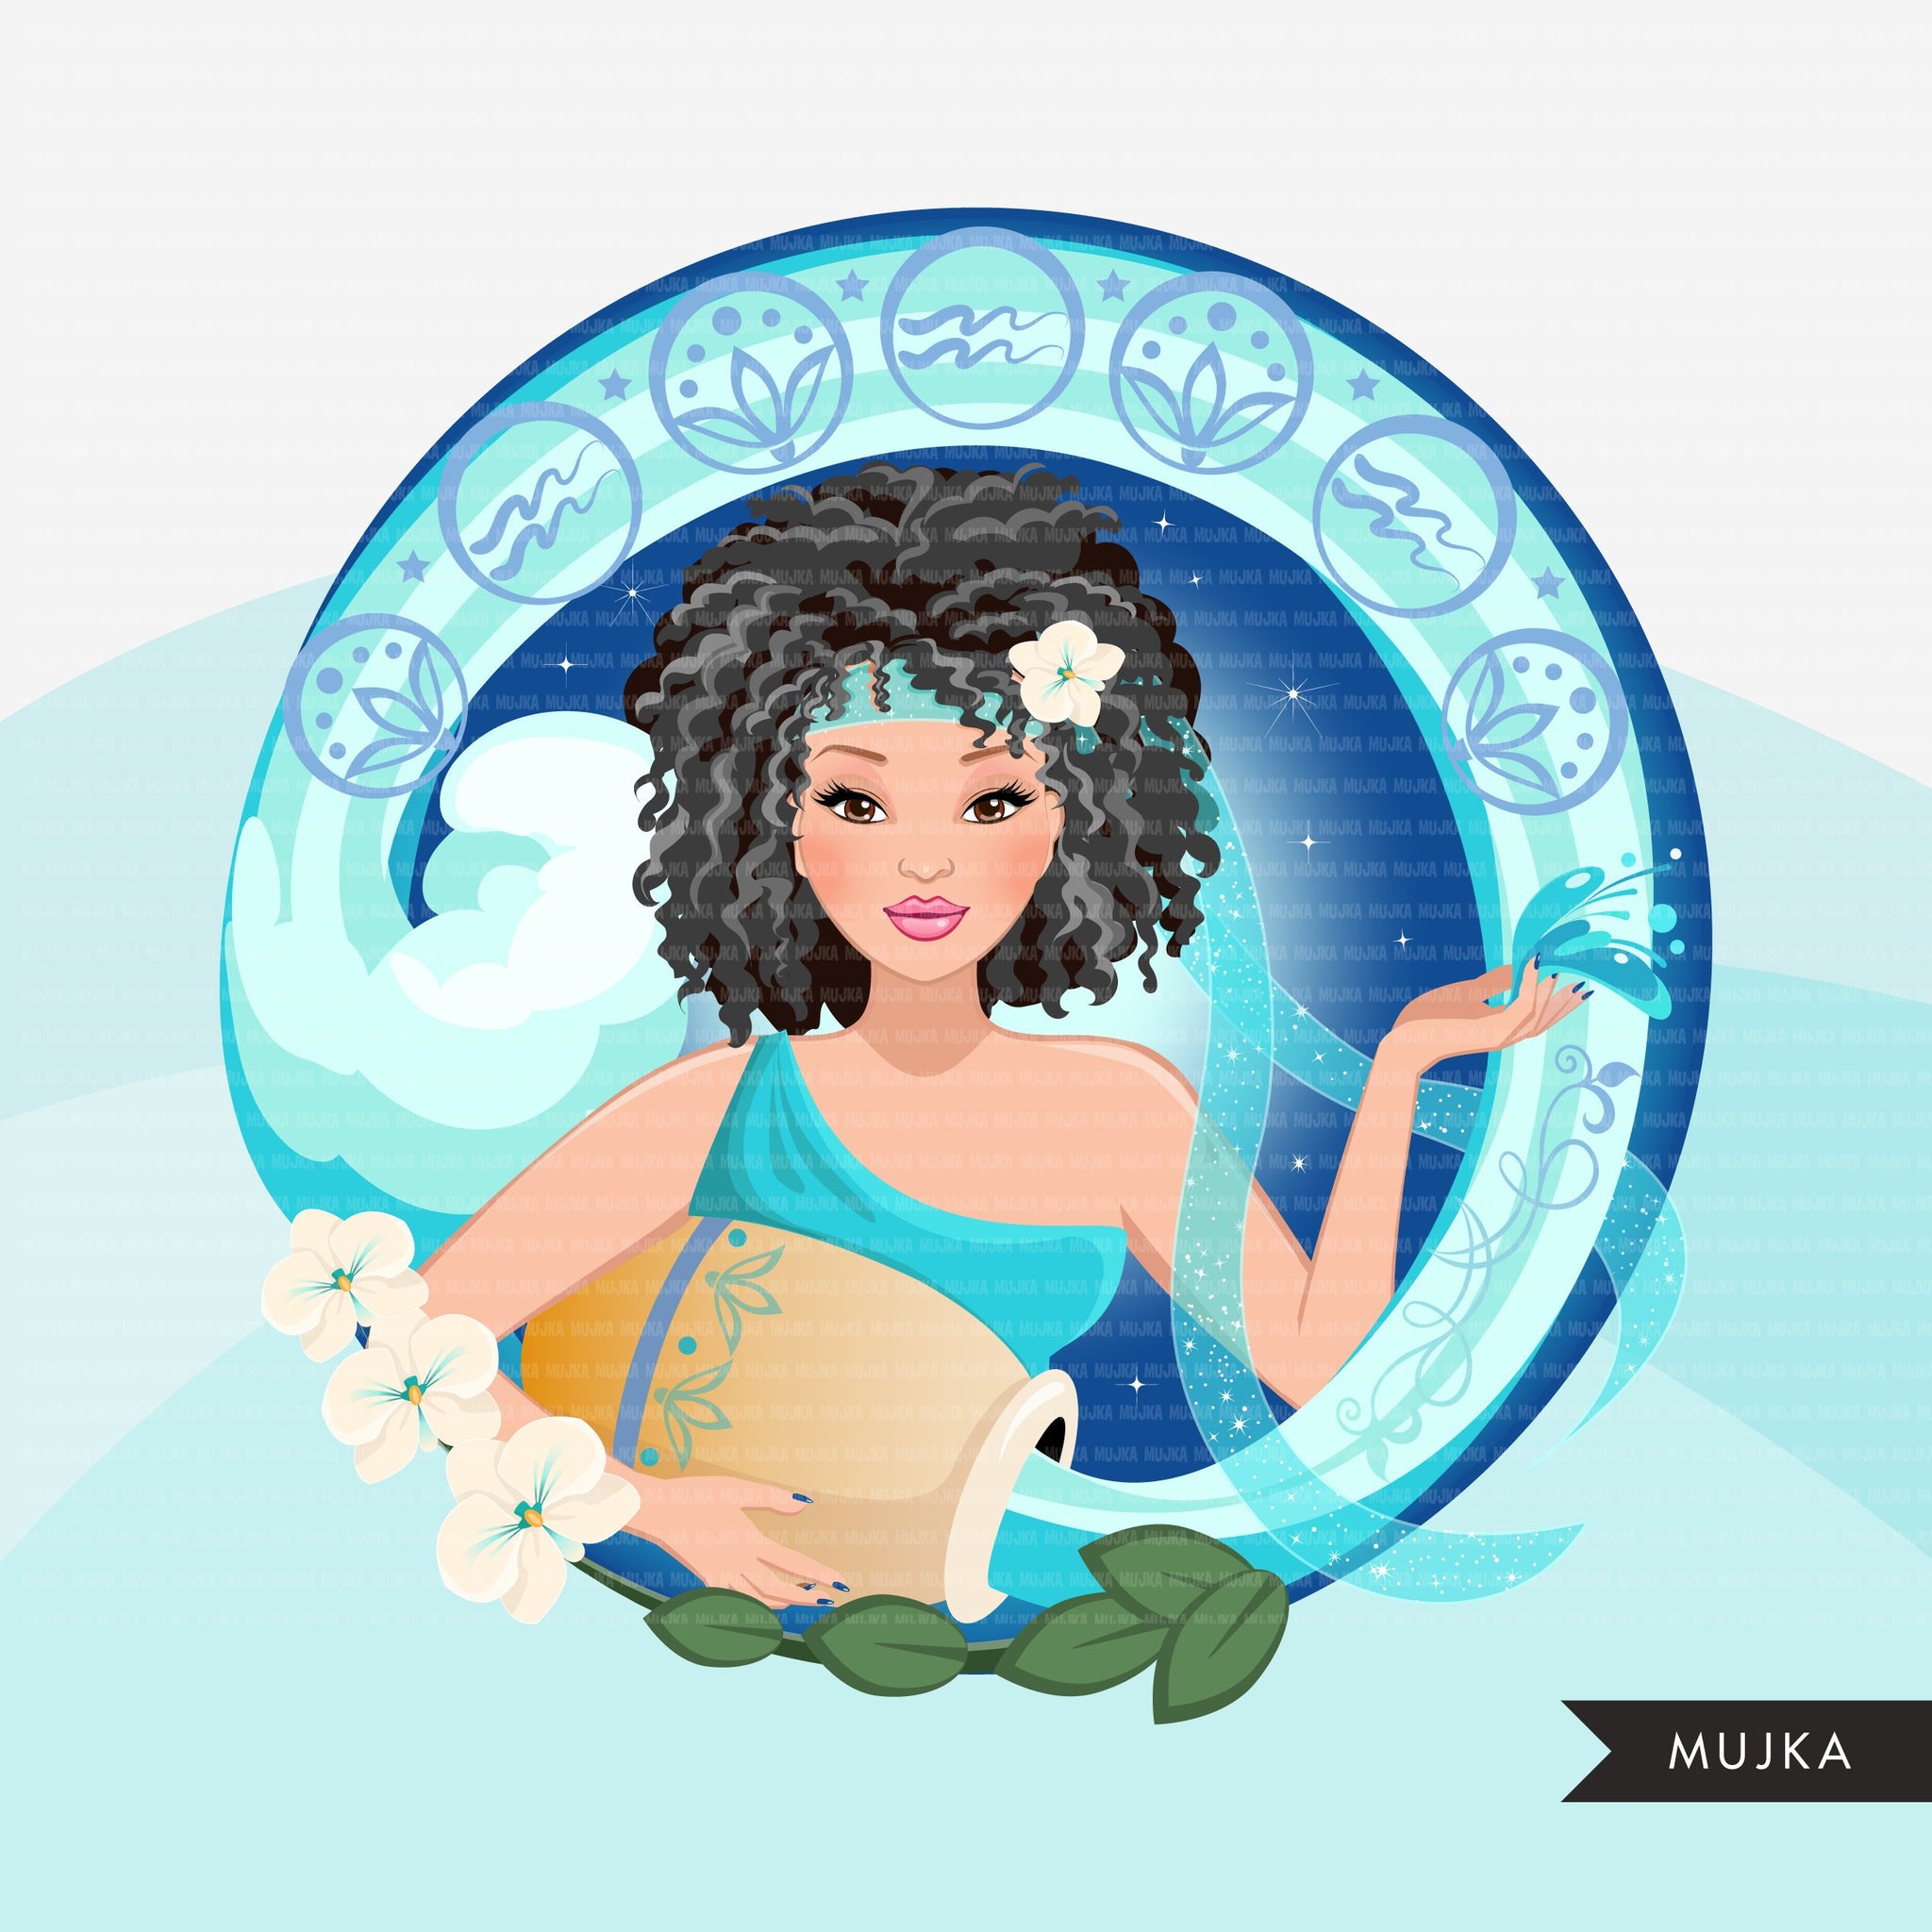 Zodiac Aquarius Clipart, Png digital download, Sublimation Graphics for Cricut & Cameo, Caucasian Curly Hair Woman Horoscope sign designs